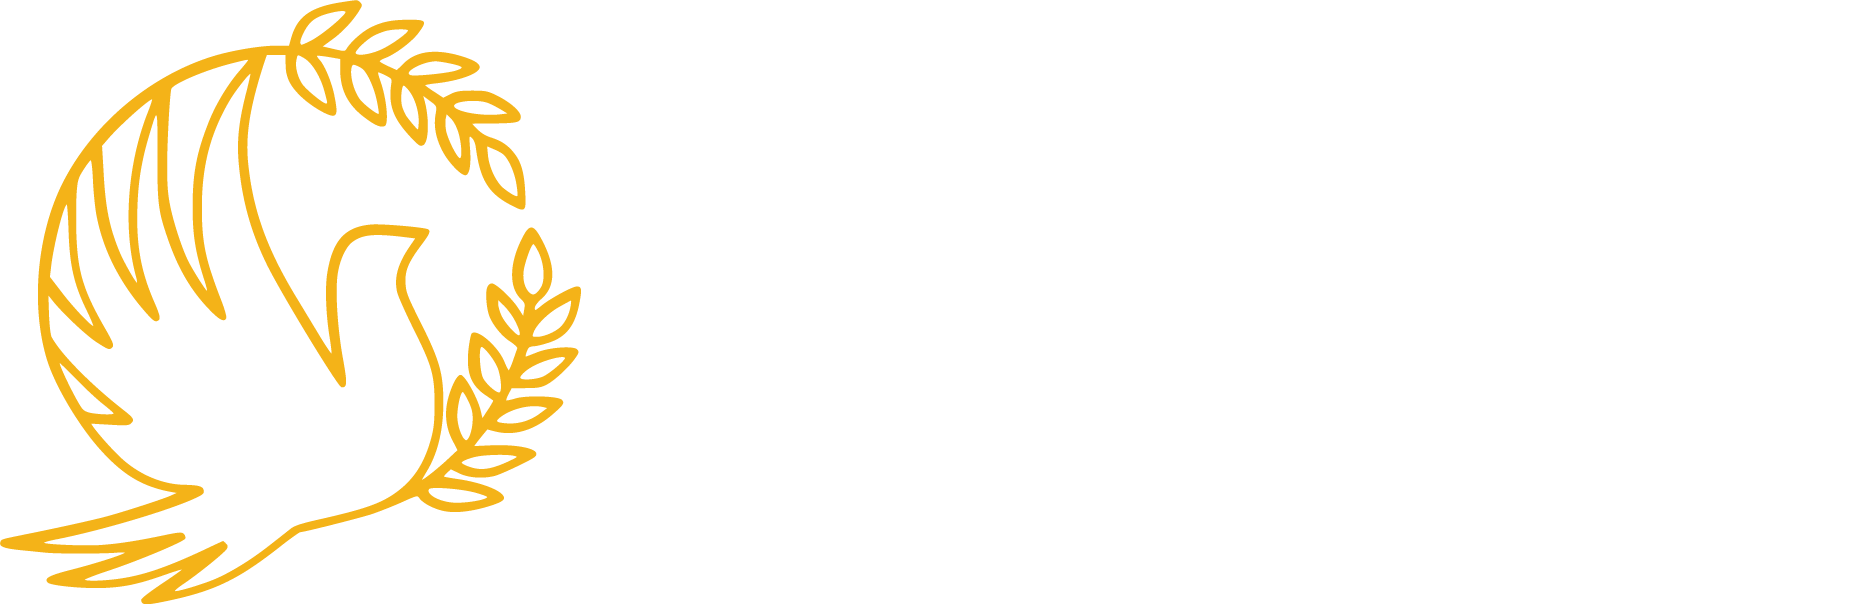 Dev Funeral home